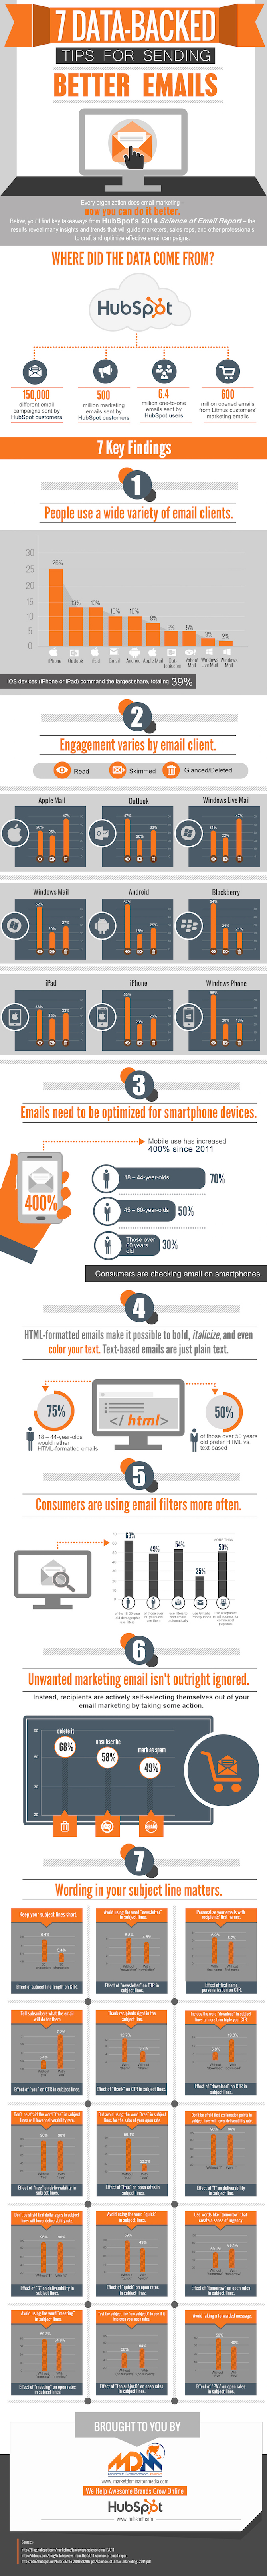 sending-better-emails-infographic